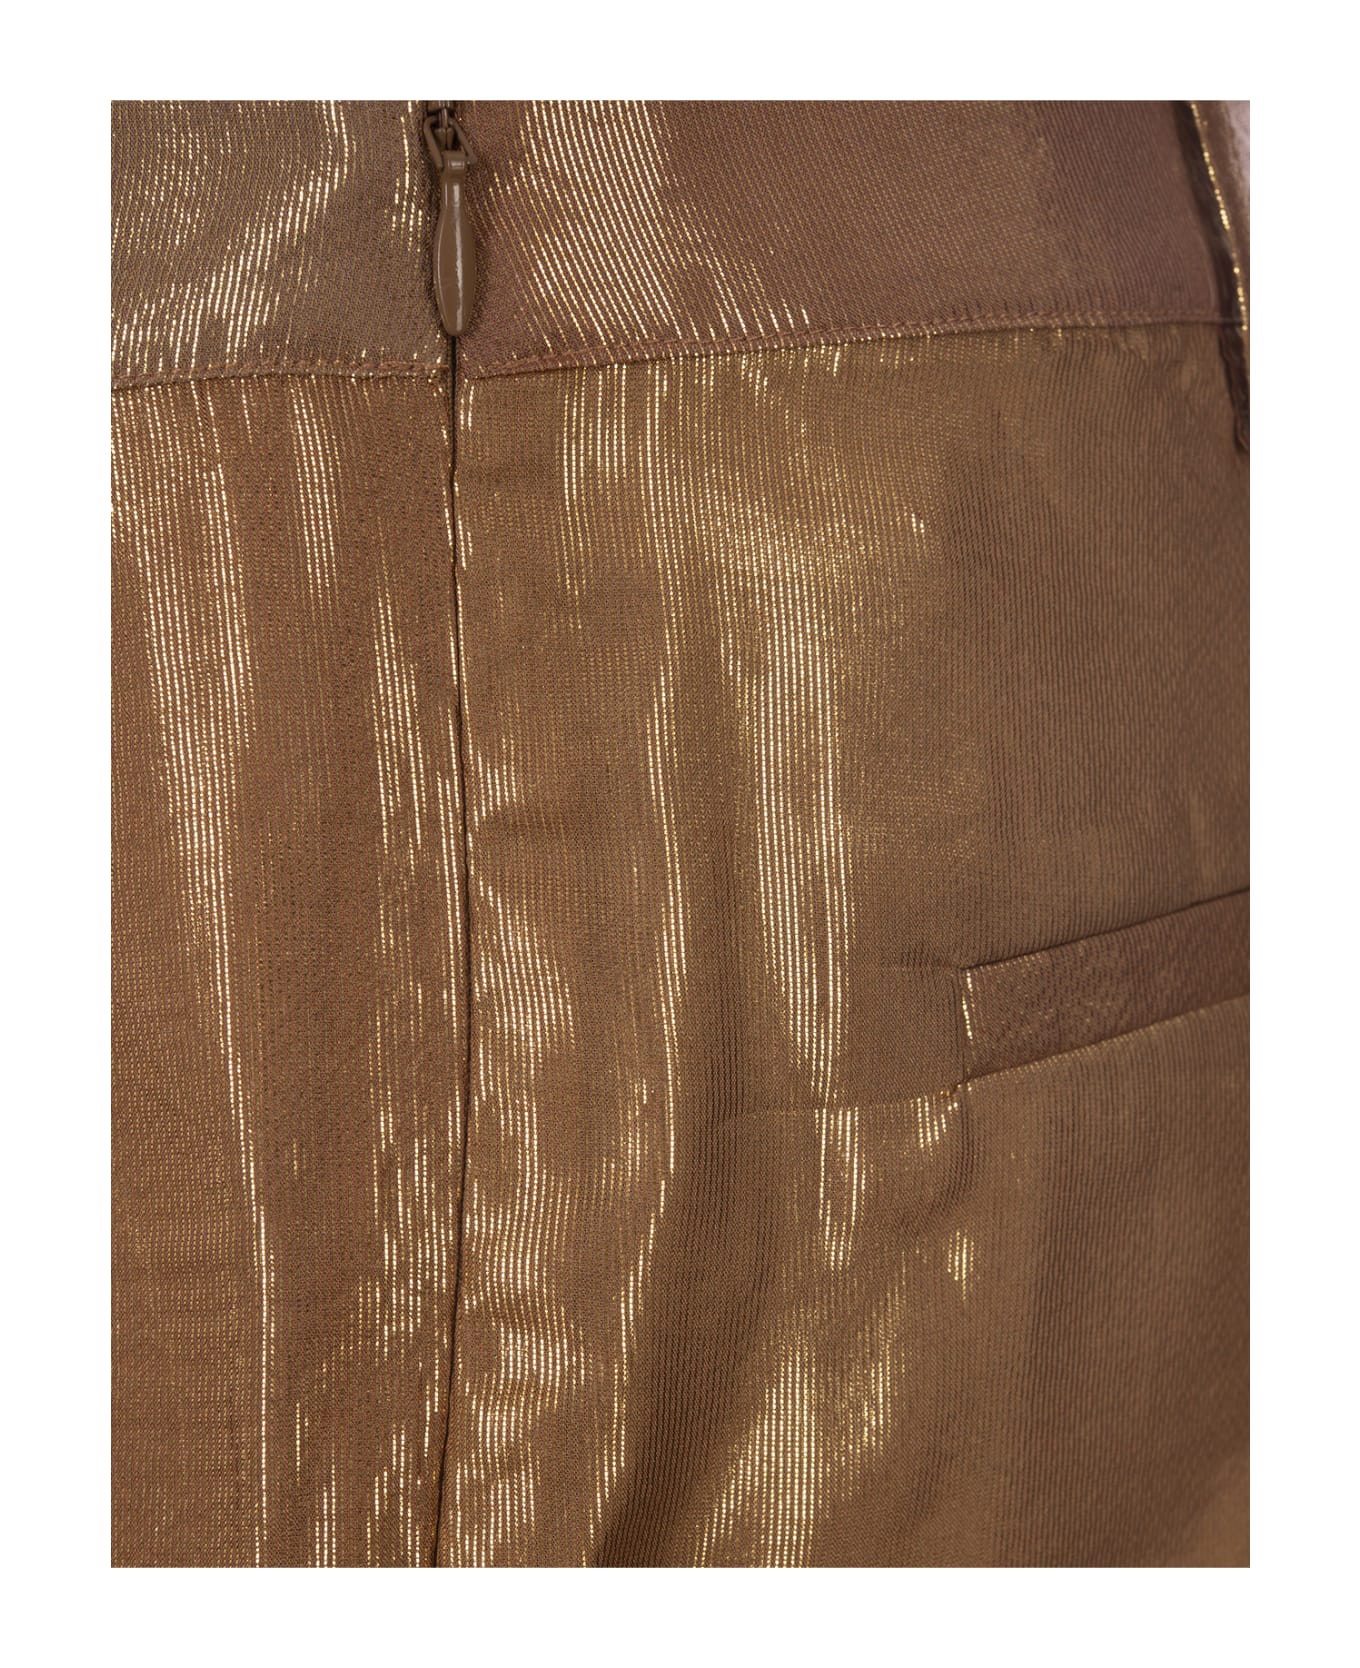 retrofete Nude Glitter Bambi Silk Chiffon Shorts - Gold